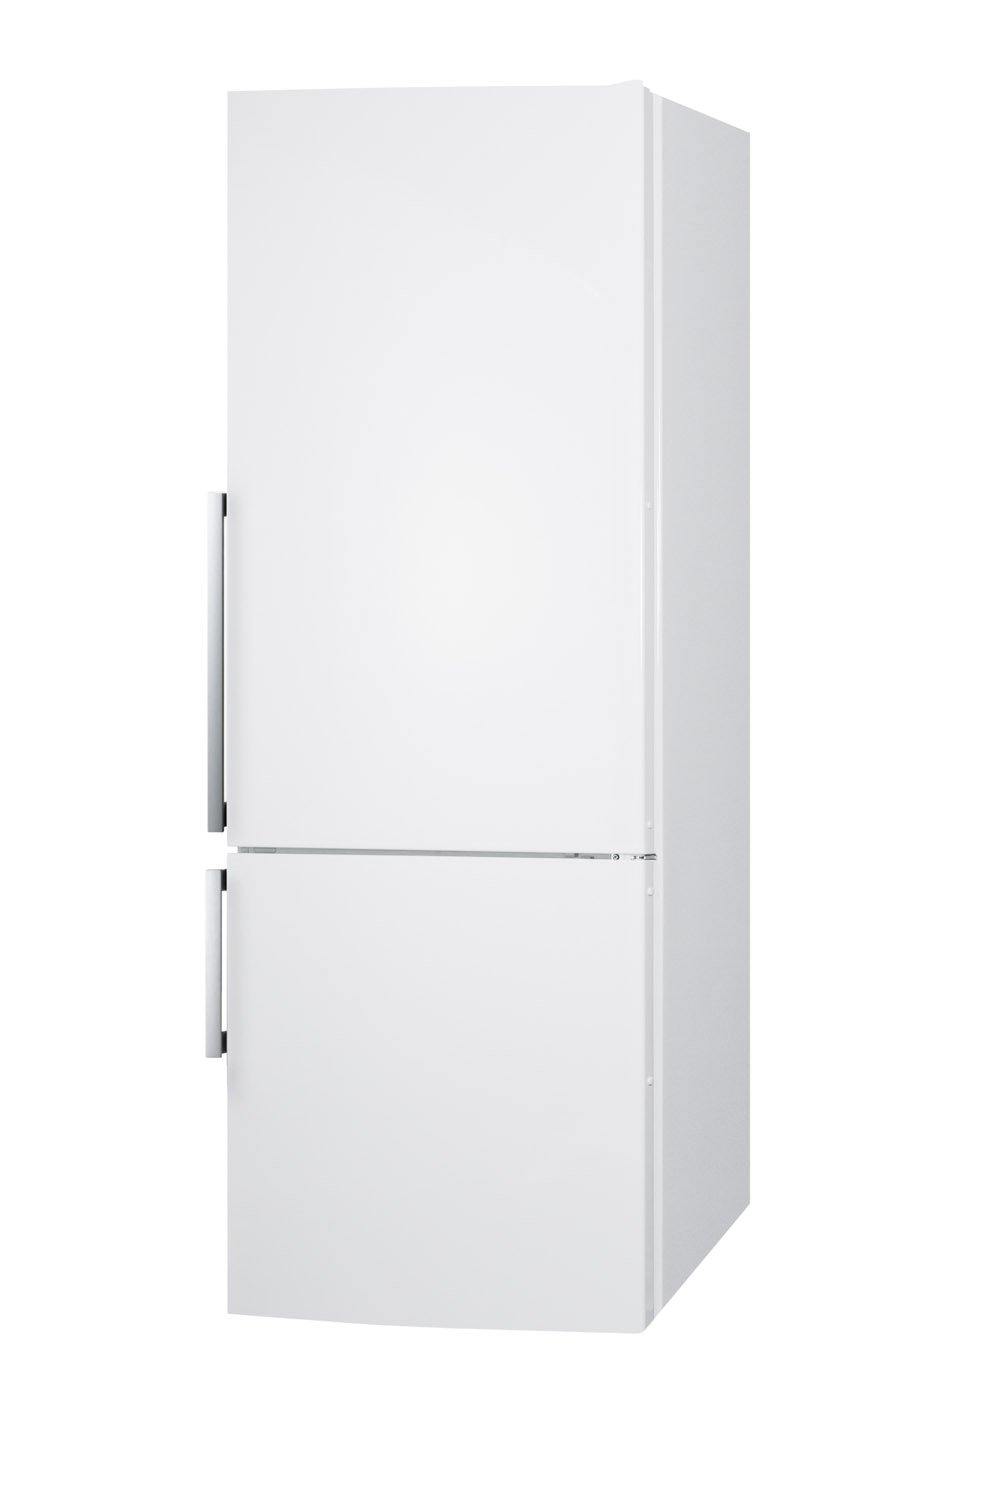 SUMMIT 28 in. Counter-Depth Bottom Freezer Refrigerator in White (FFBF281W)